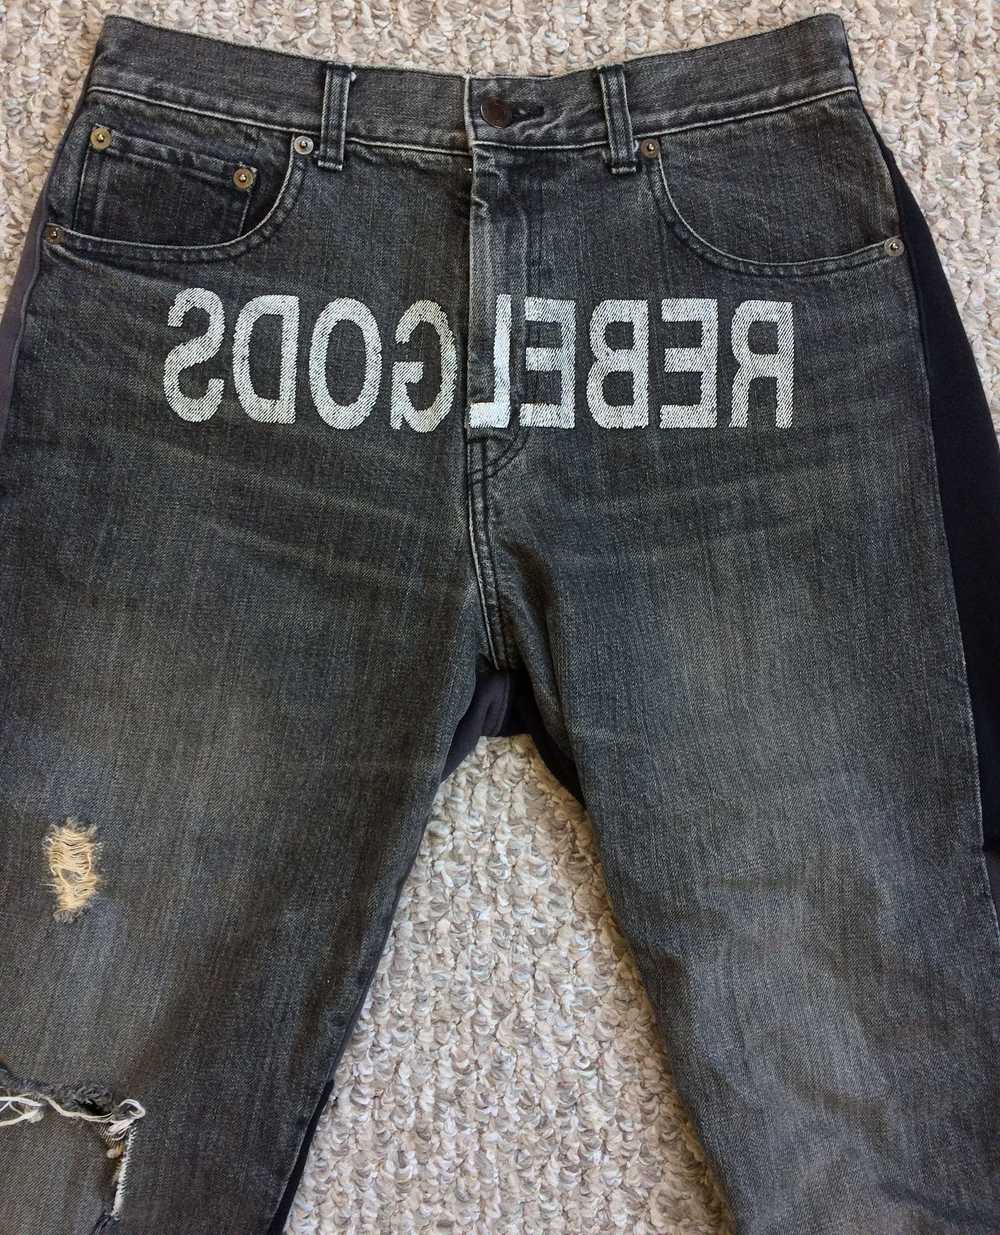 Undercover F/W 2003 Rebelgods Hybrid Pants - image 2